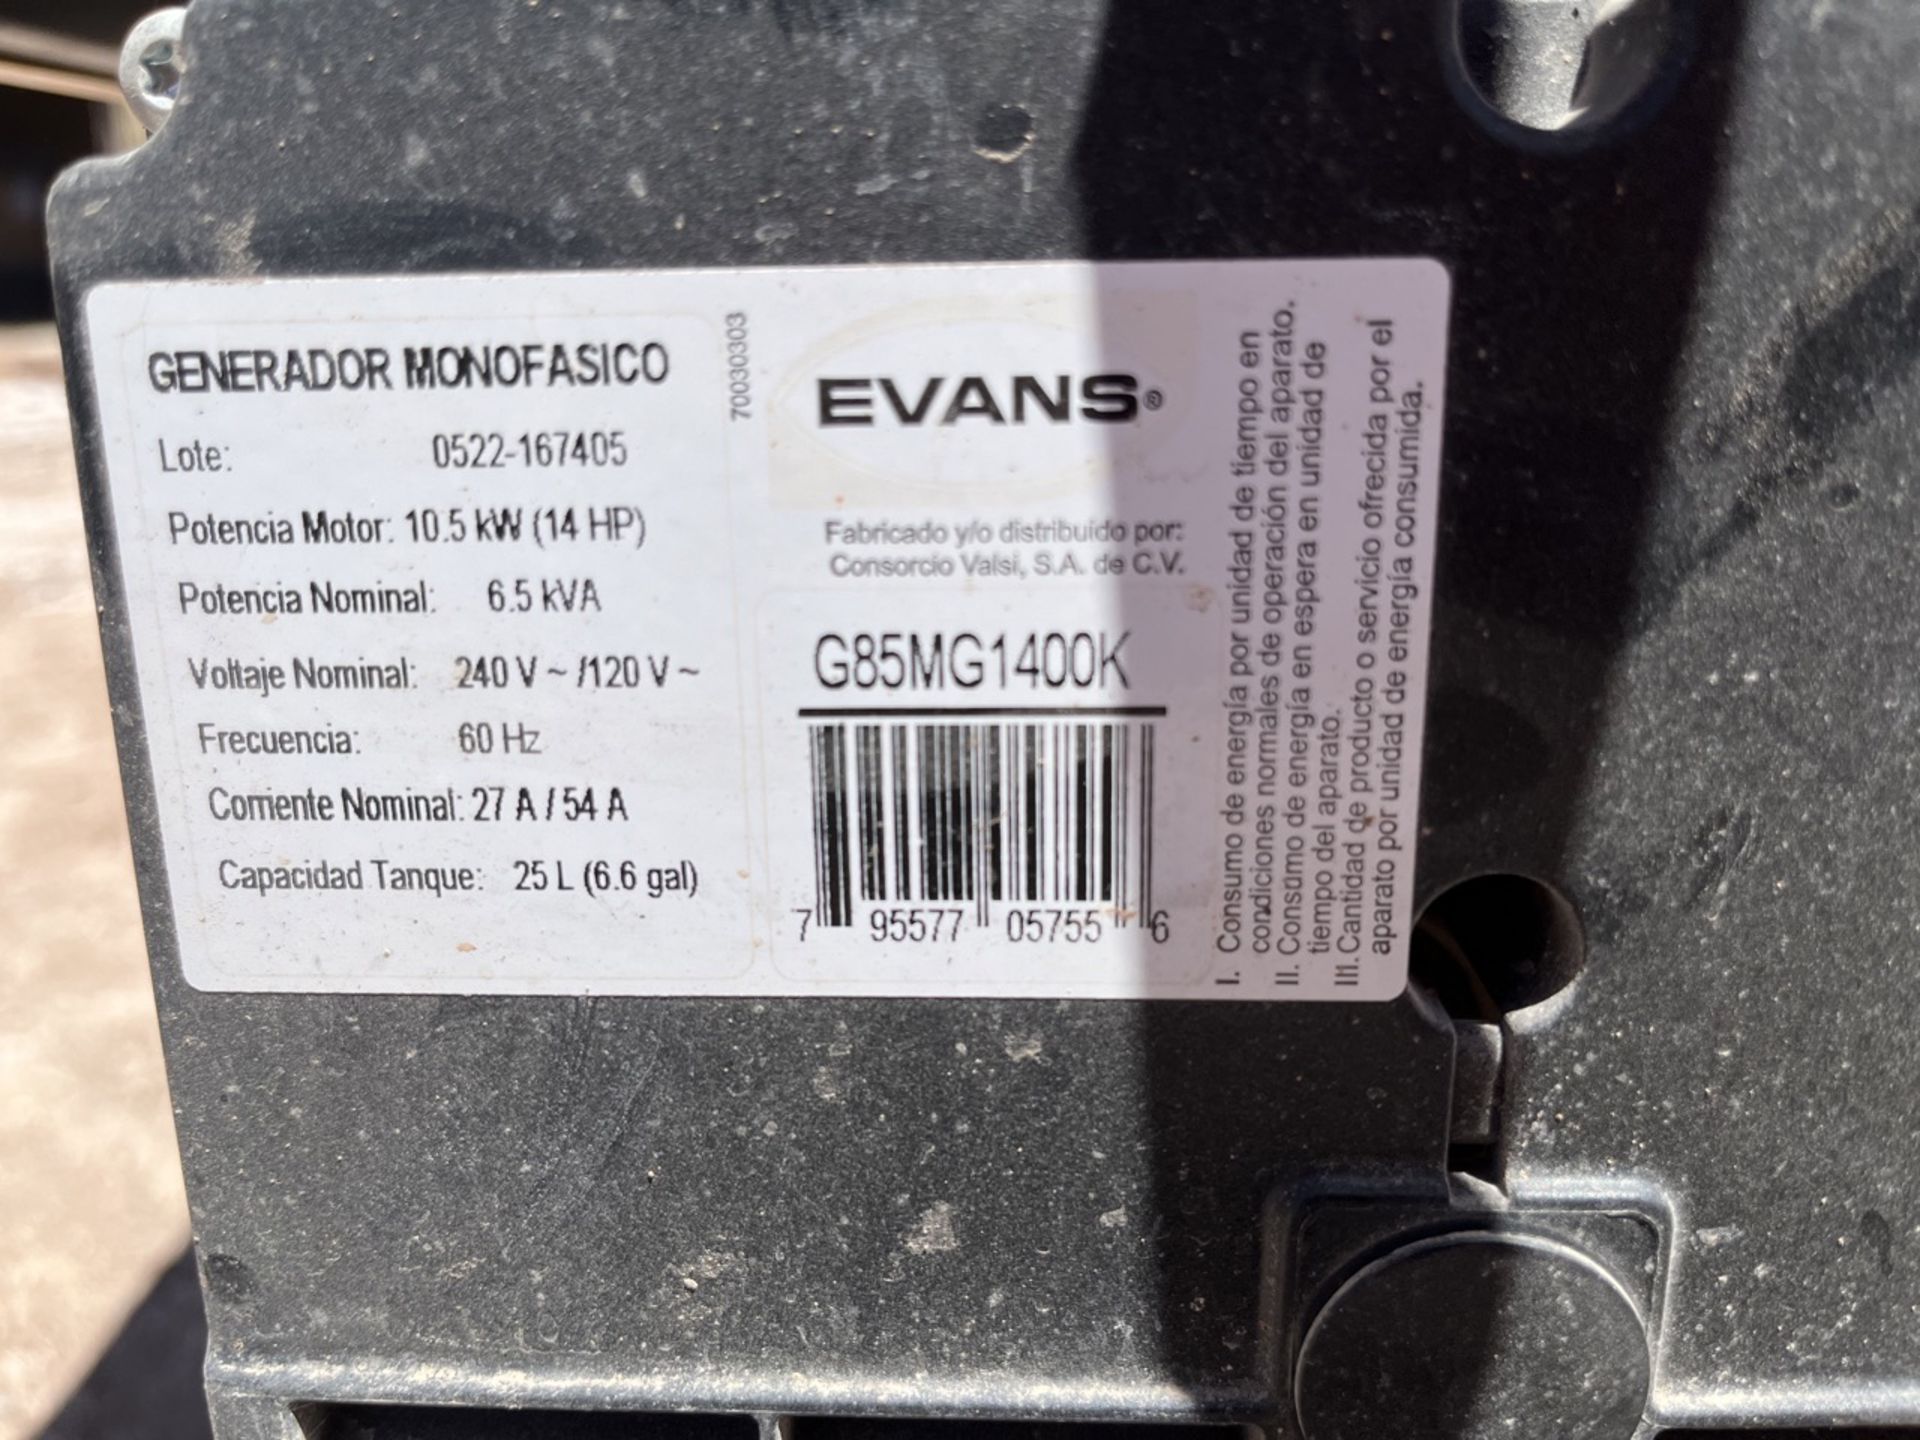 Evans Generator, Model ND, Series 0522-167405, Engine Power 14hp, Capacity 6.5 kVA, 120/240V, 60HZ. - Image 11 of 12